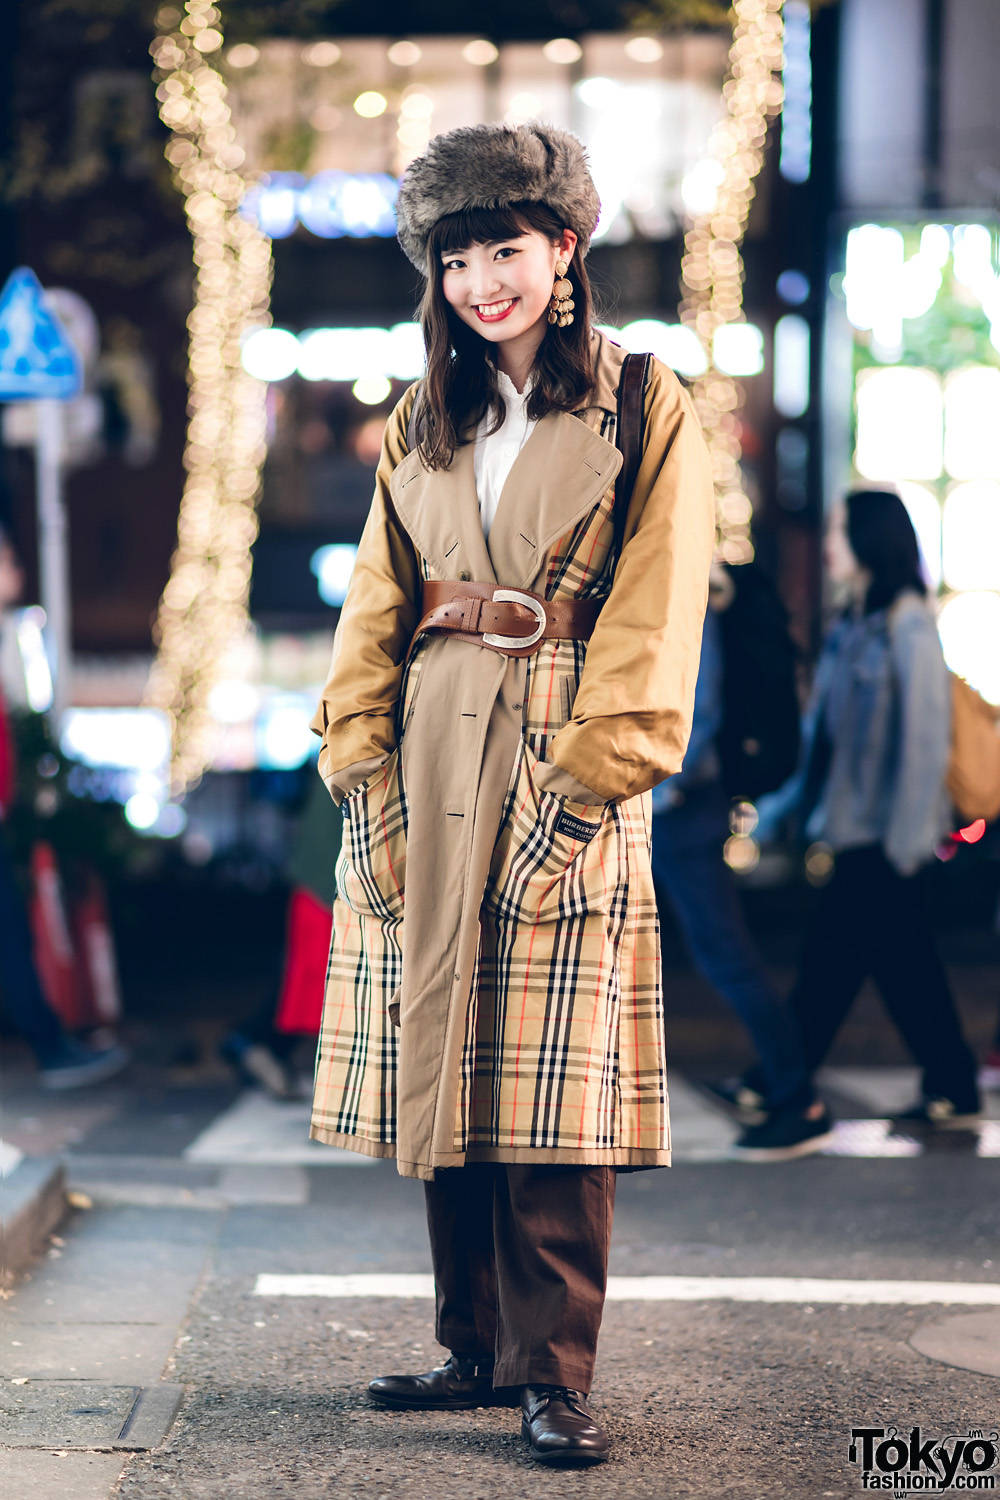 Harajuku Girl in Retro Style w/ Furry Hat, RRR Vintage Burberry Plaid Coat, Leather Backpack, MICMO & Shimokita Market